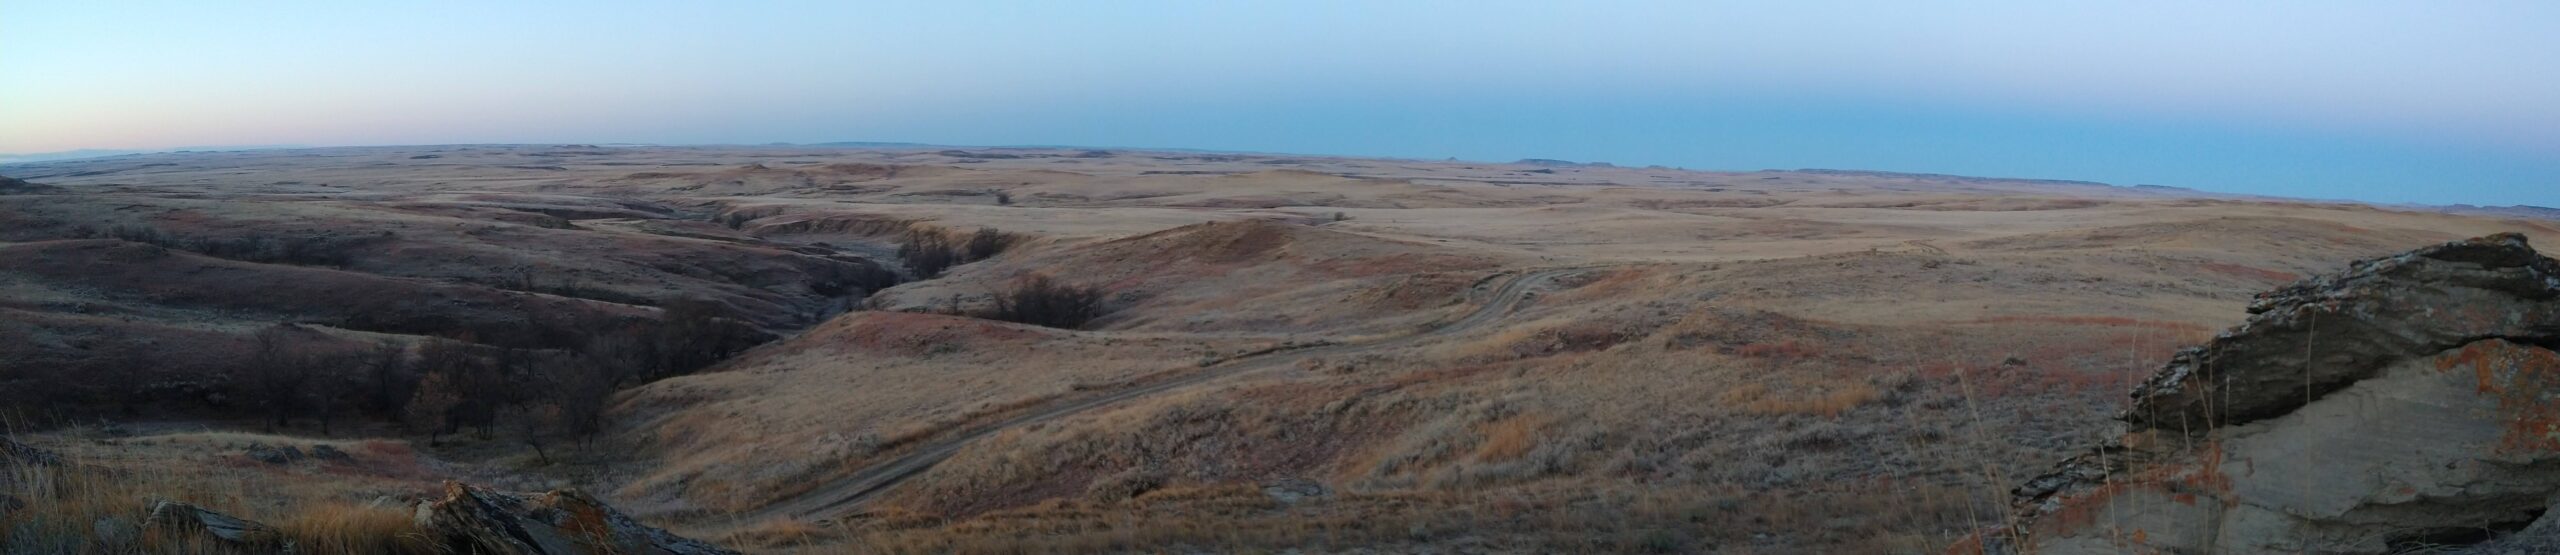 South Dakota hills scenery